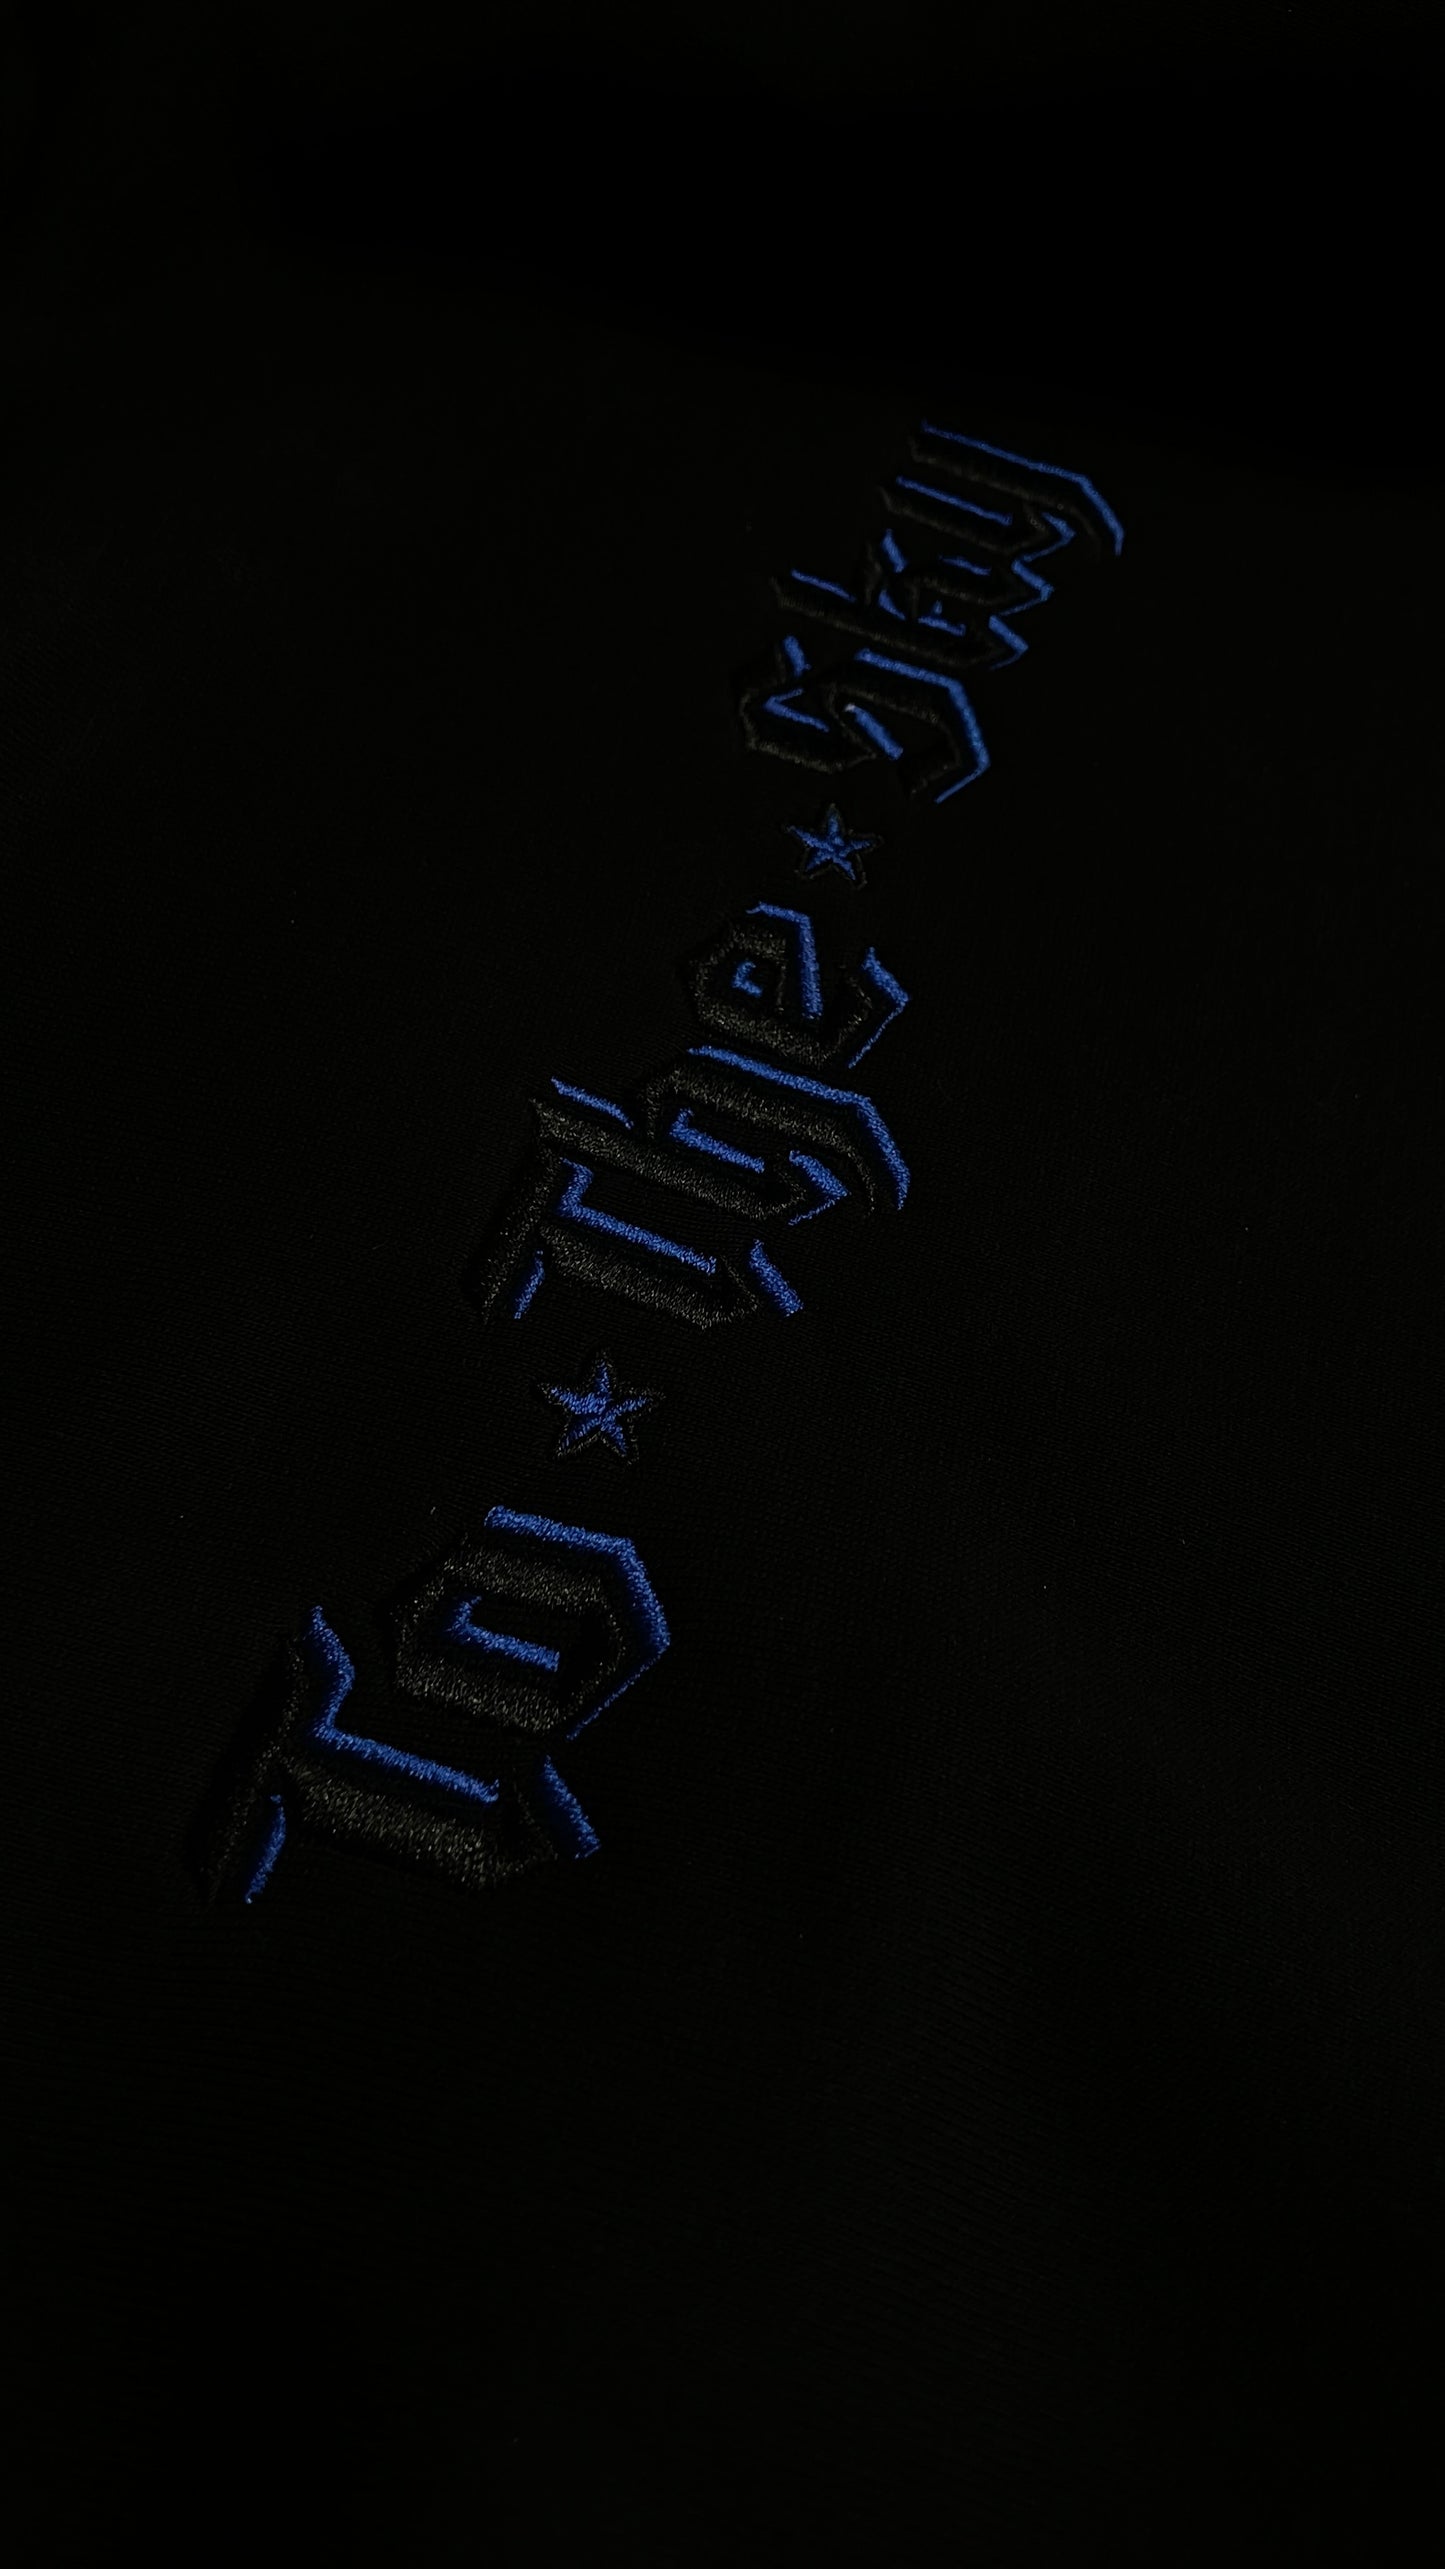 “To The Sky” heavyweight hoodie - Dark black and blue